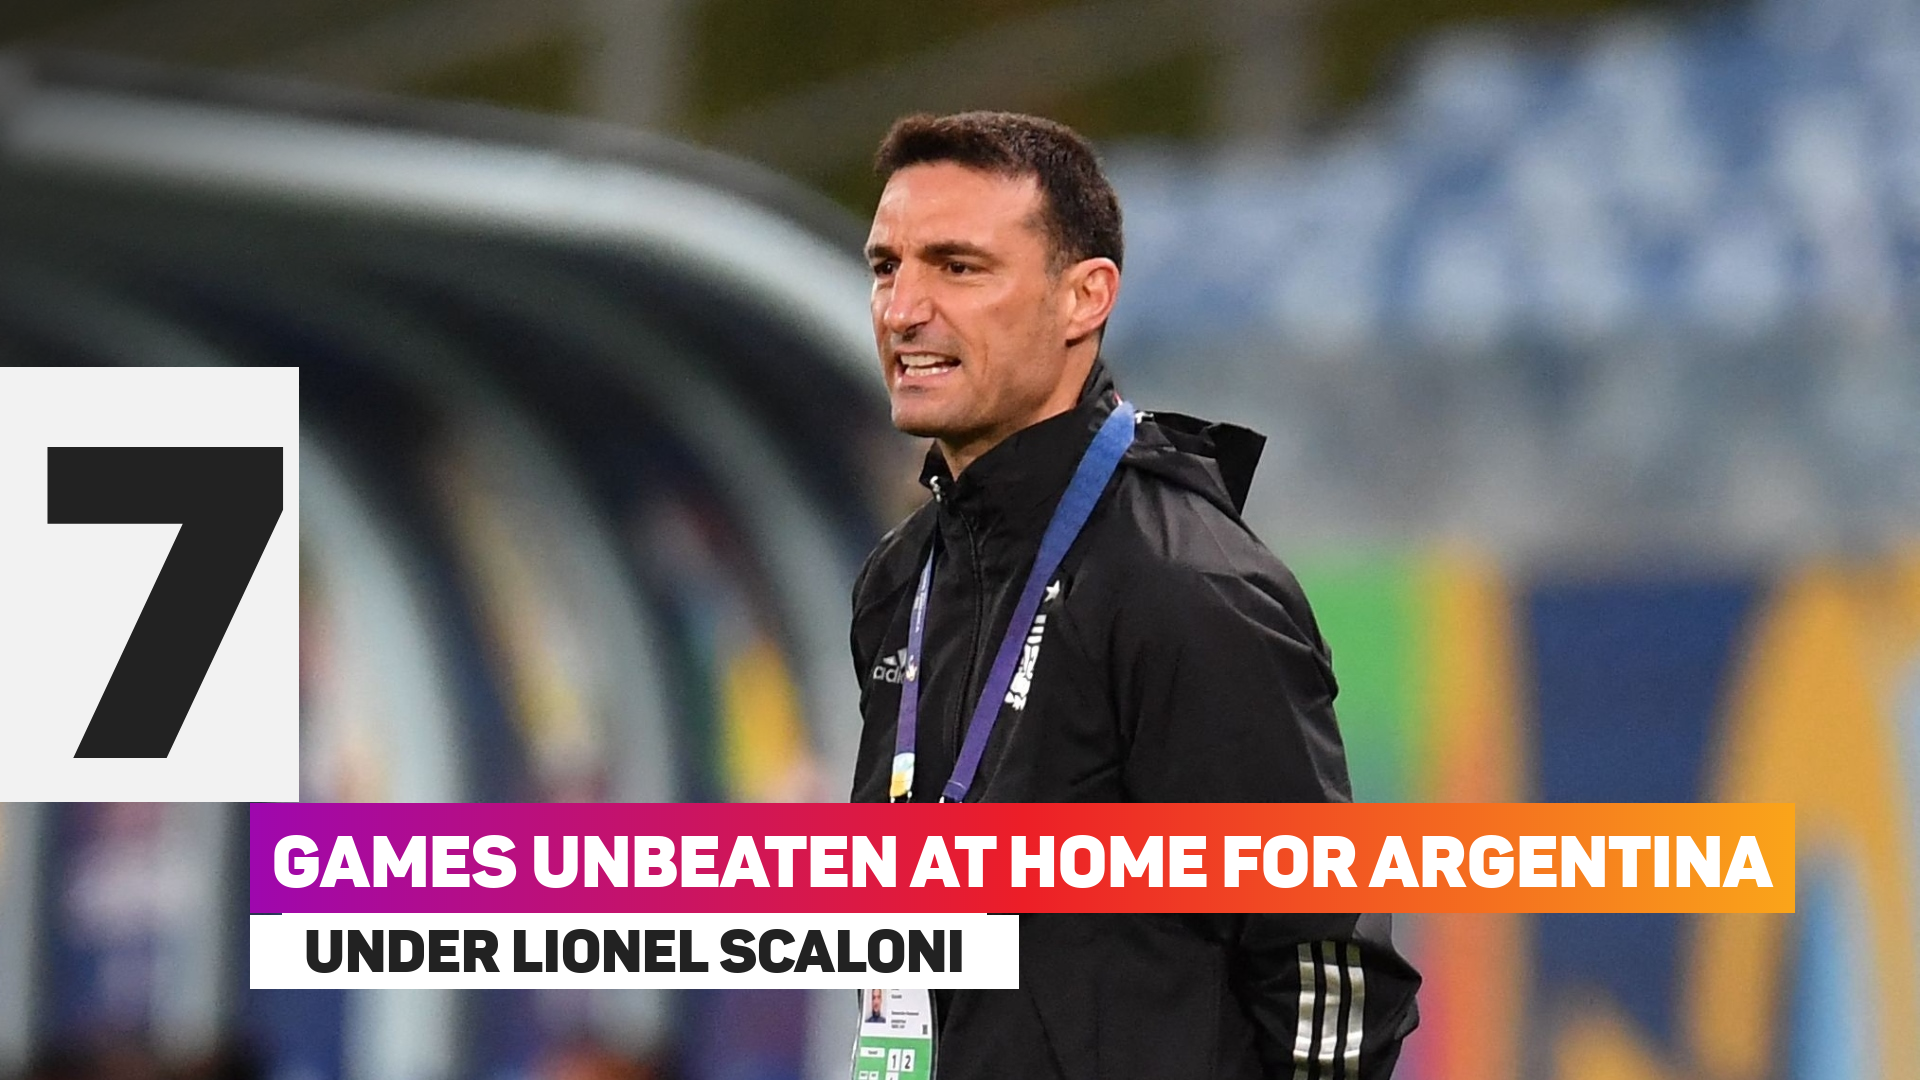 Argentina are unbeaten in seven home games under Lionel Scaloni